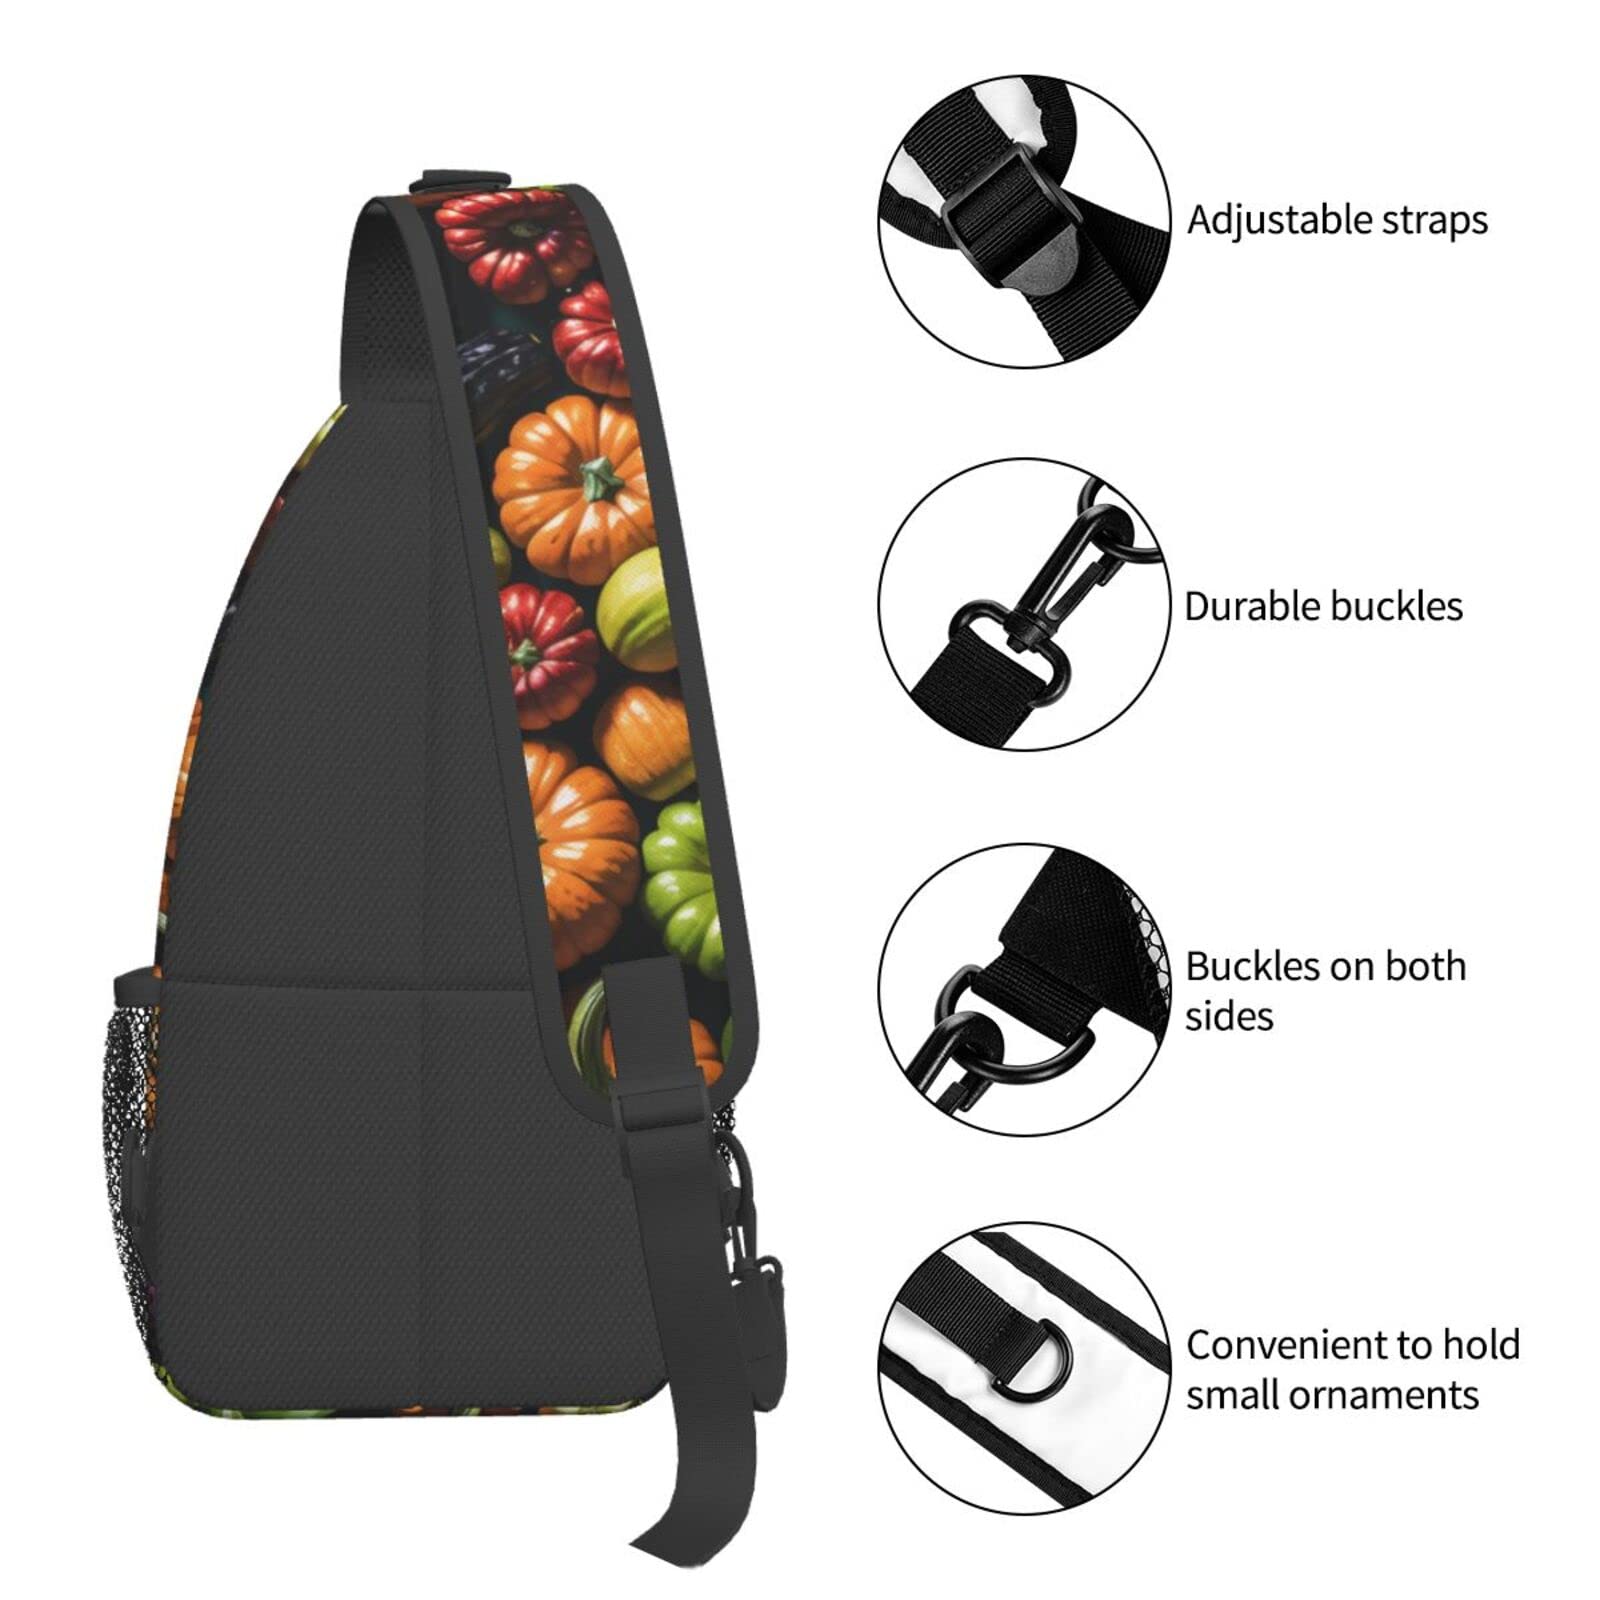 MIXMEY Fruits And Vegetable Print Cross Chest Bag Diagonally,Sling Backpack Fashion Travel Hiking Daypack Crossbody Shoulder Bag For Men Women